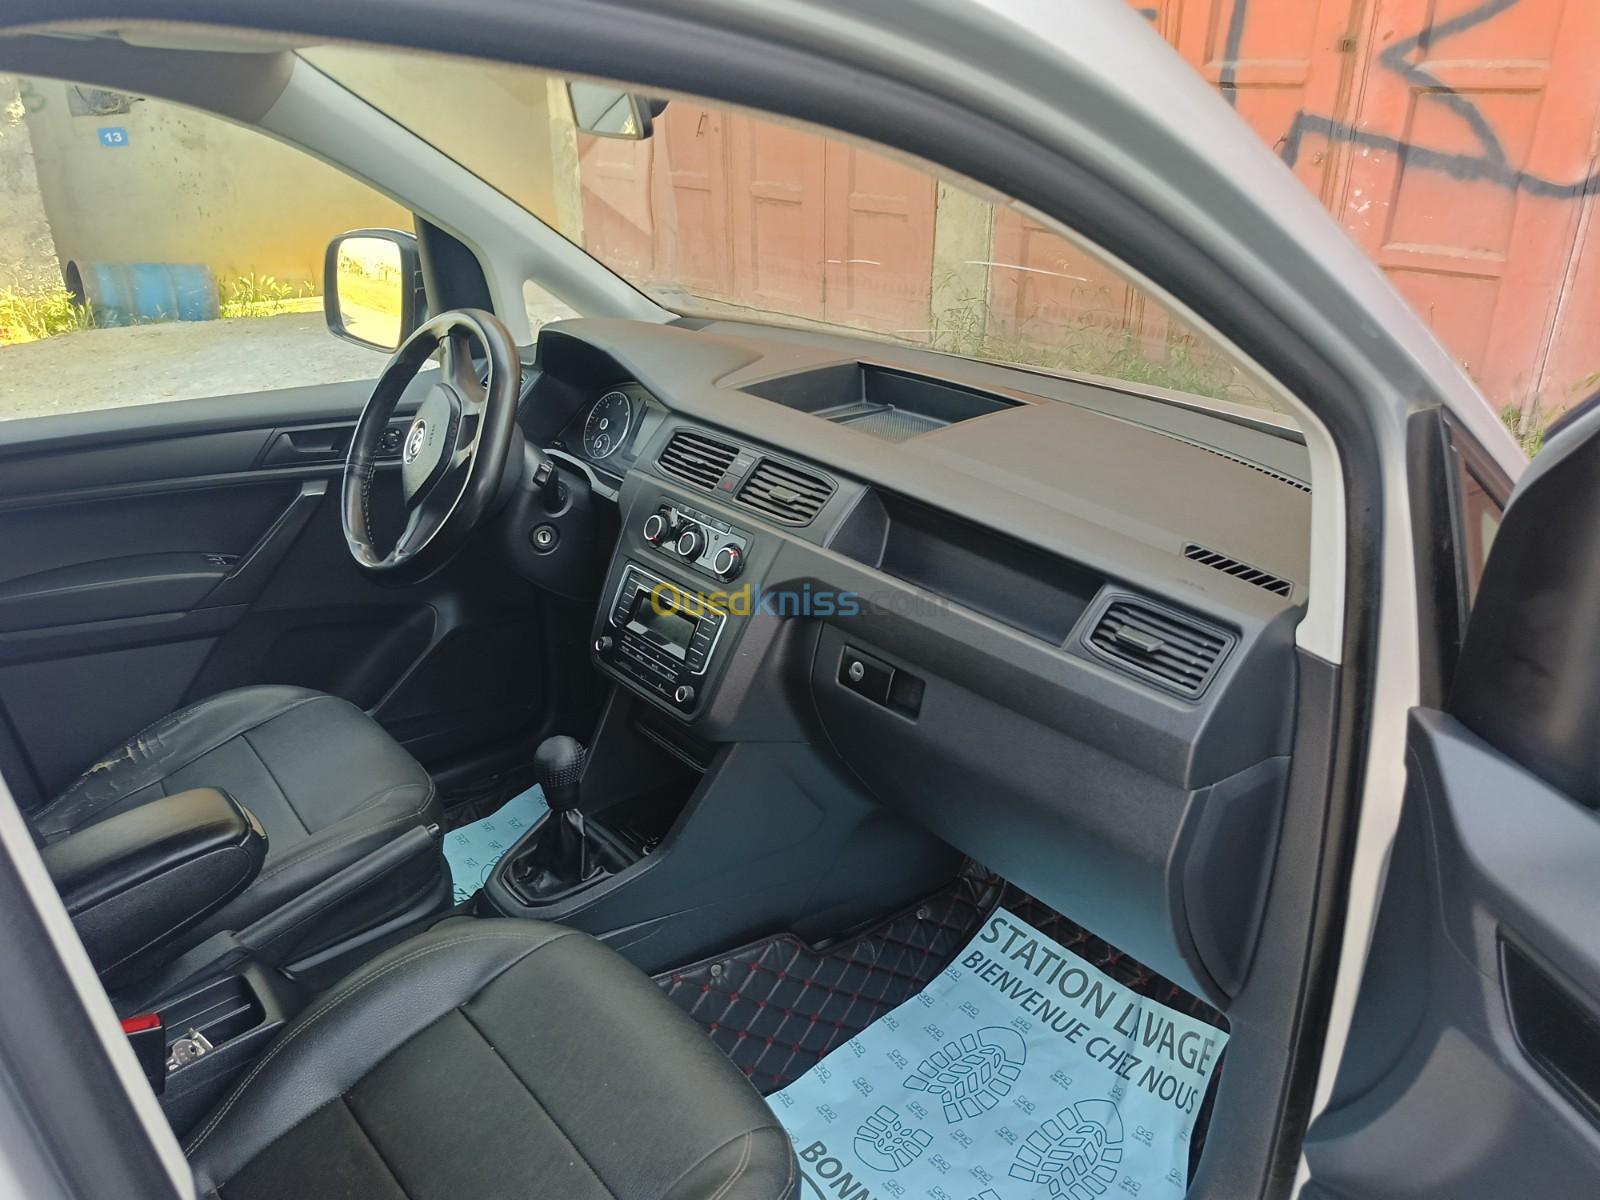 Volkswagen Caddy 2019 Fourgon